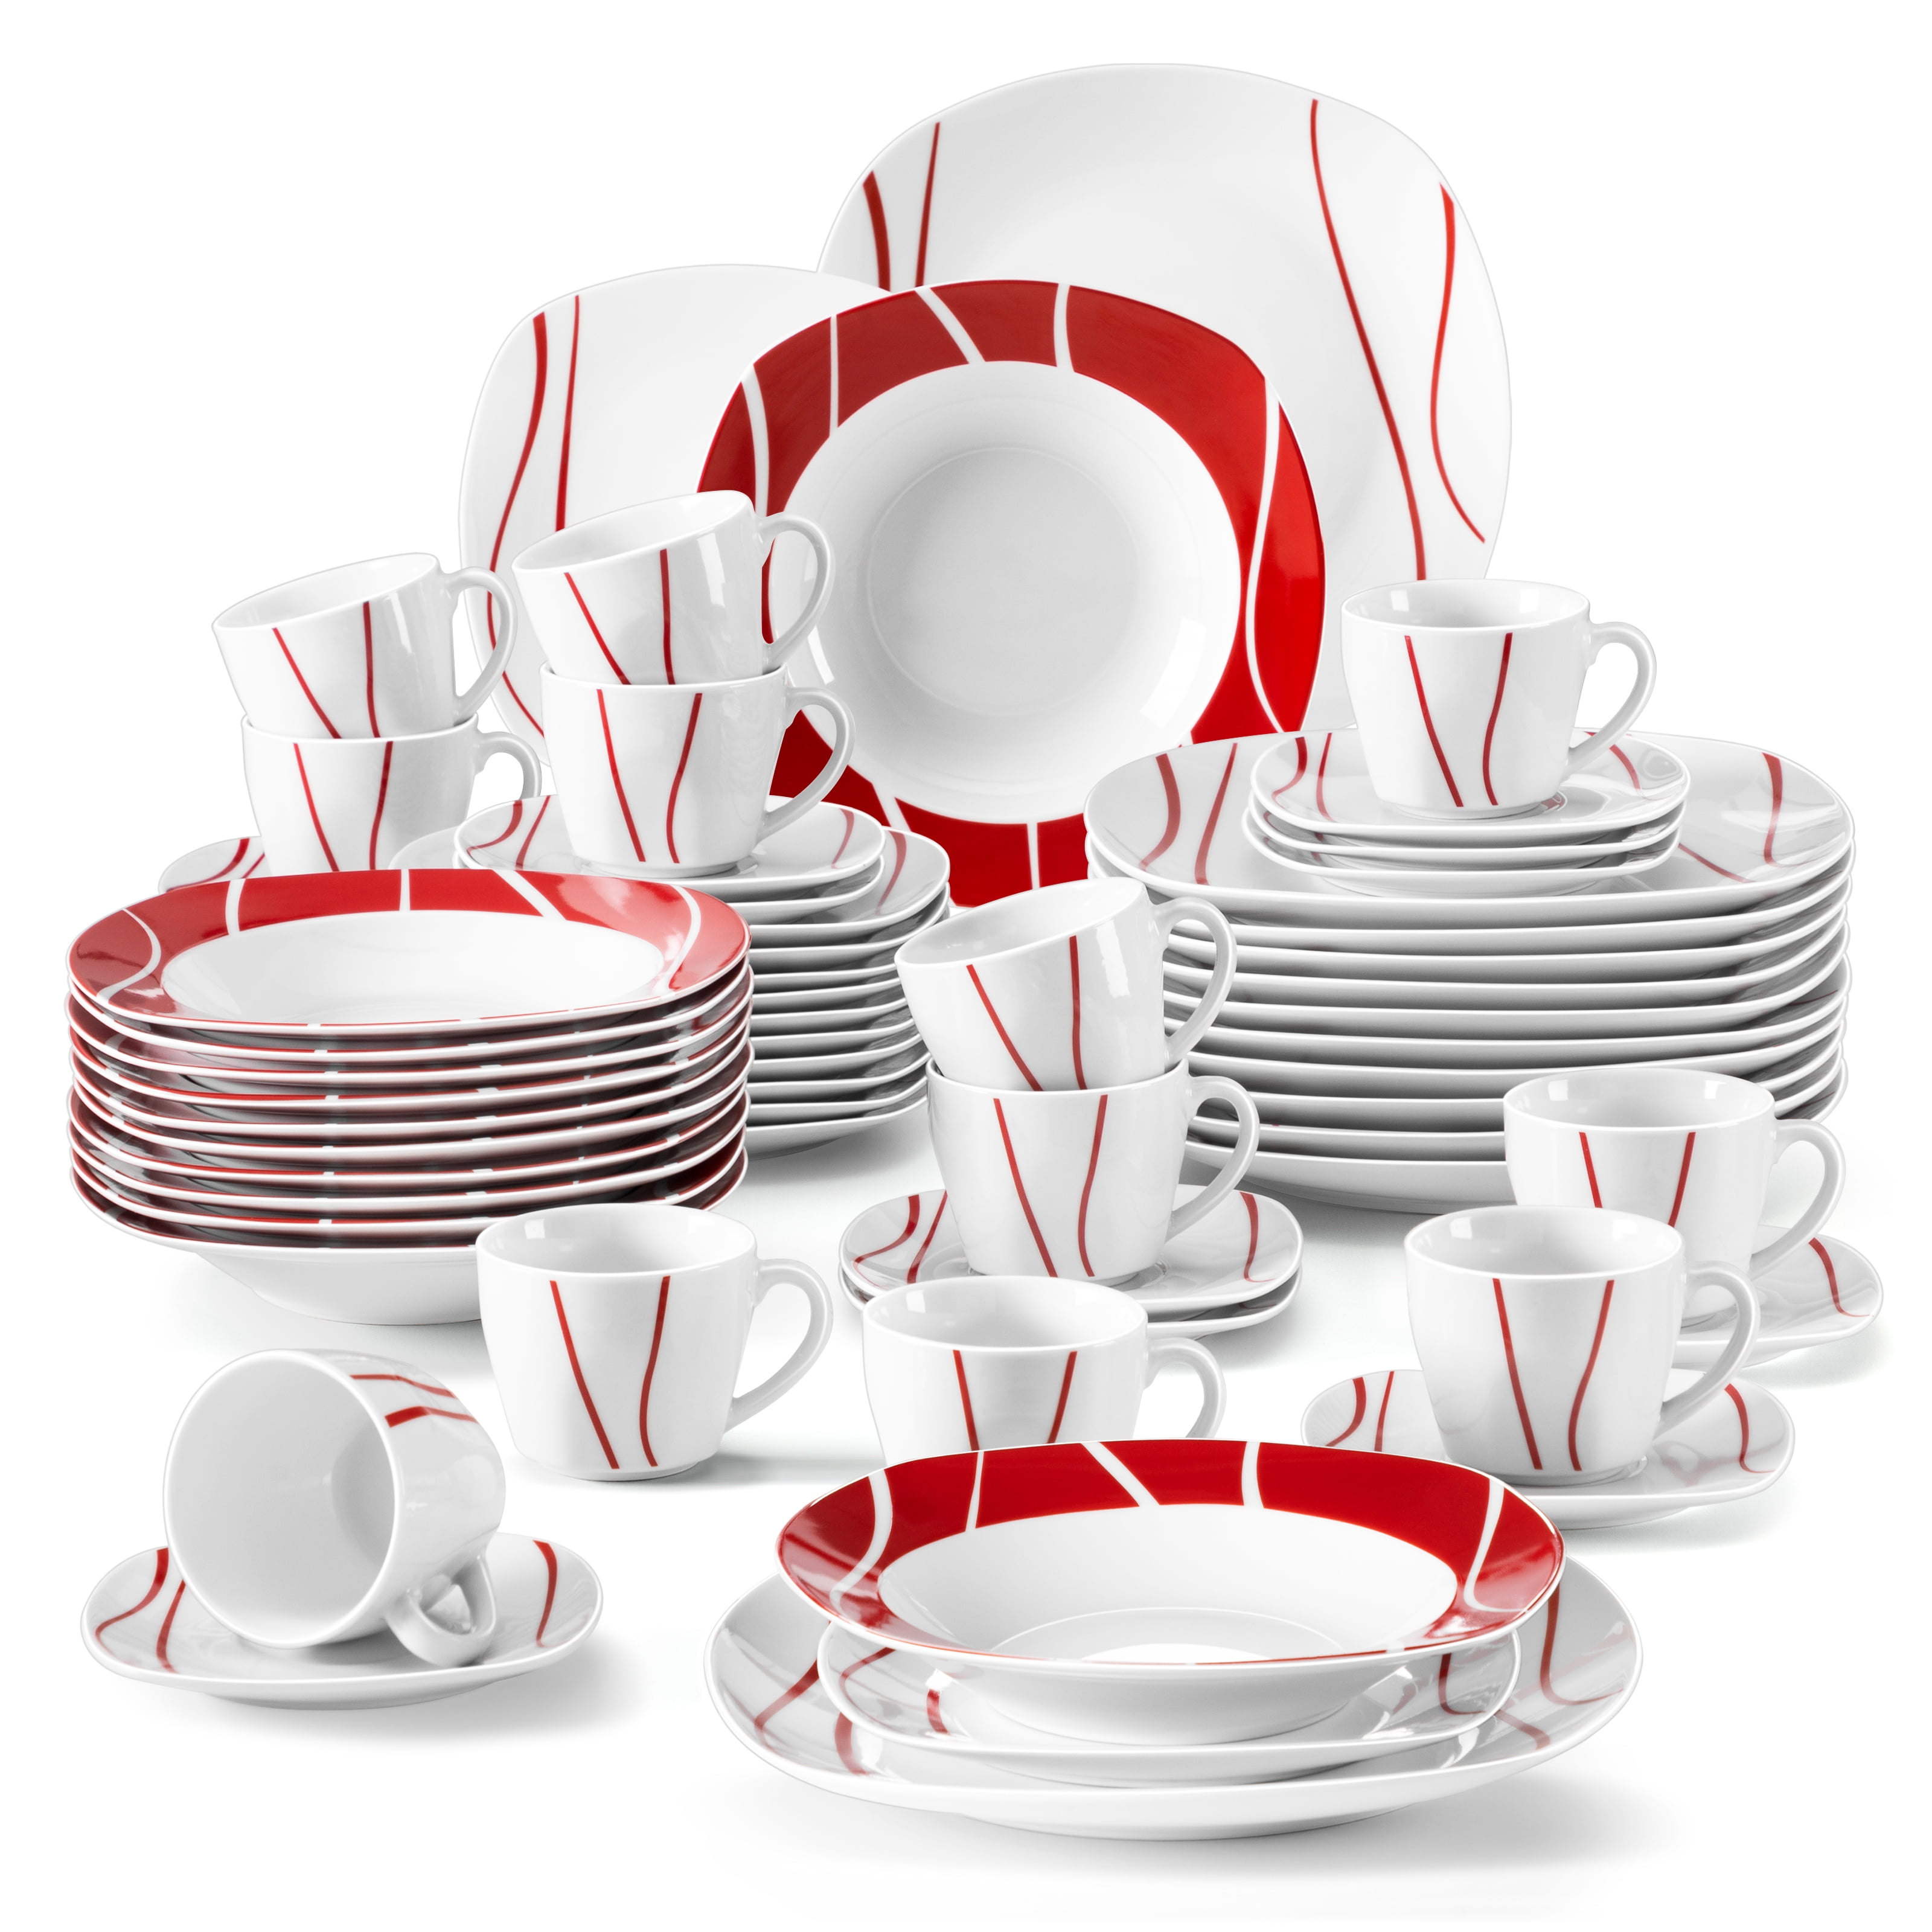 MALACASA Felisa 18-Piece White with Red Edge Porcelain Dinnerware